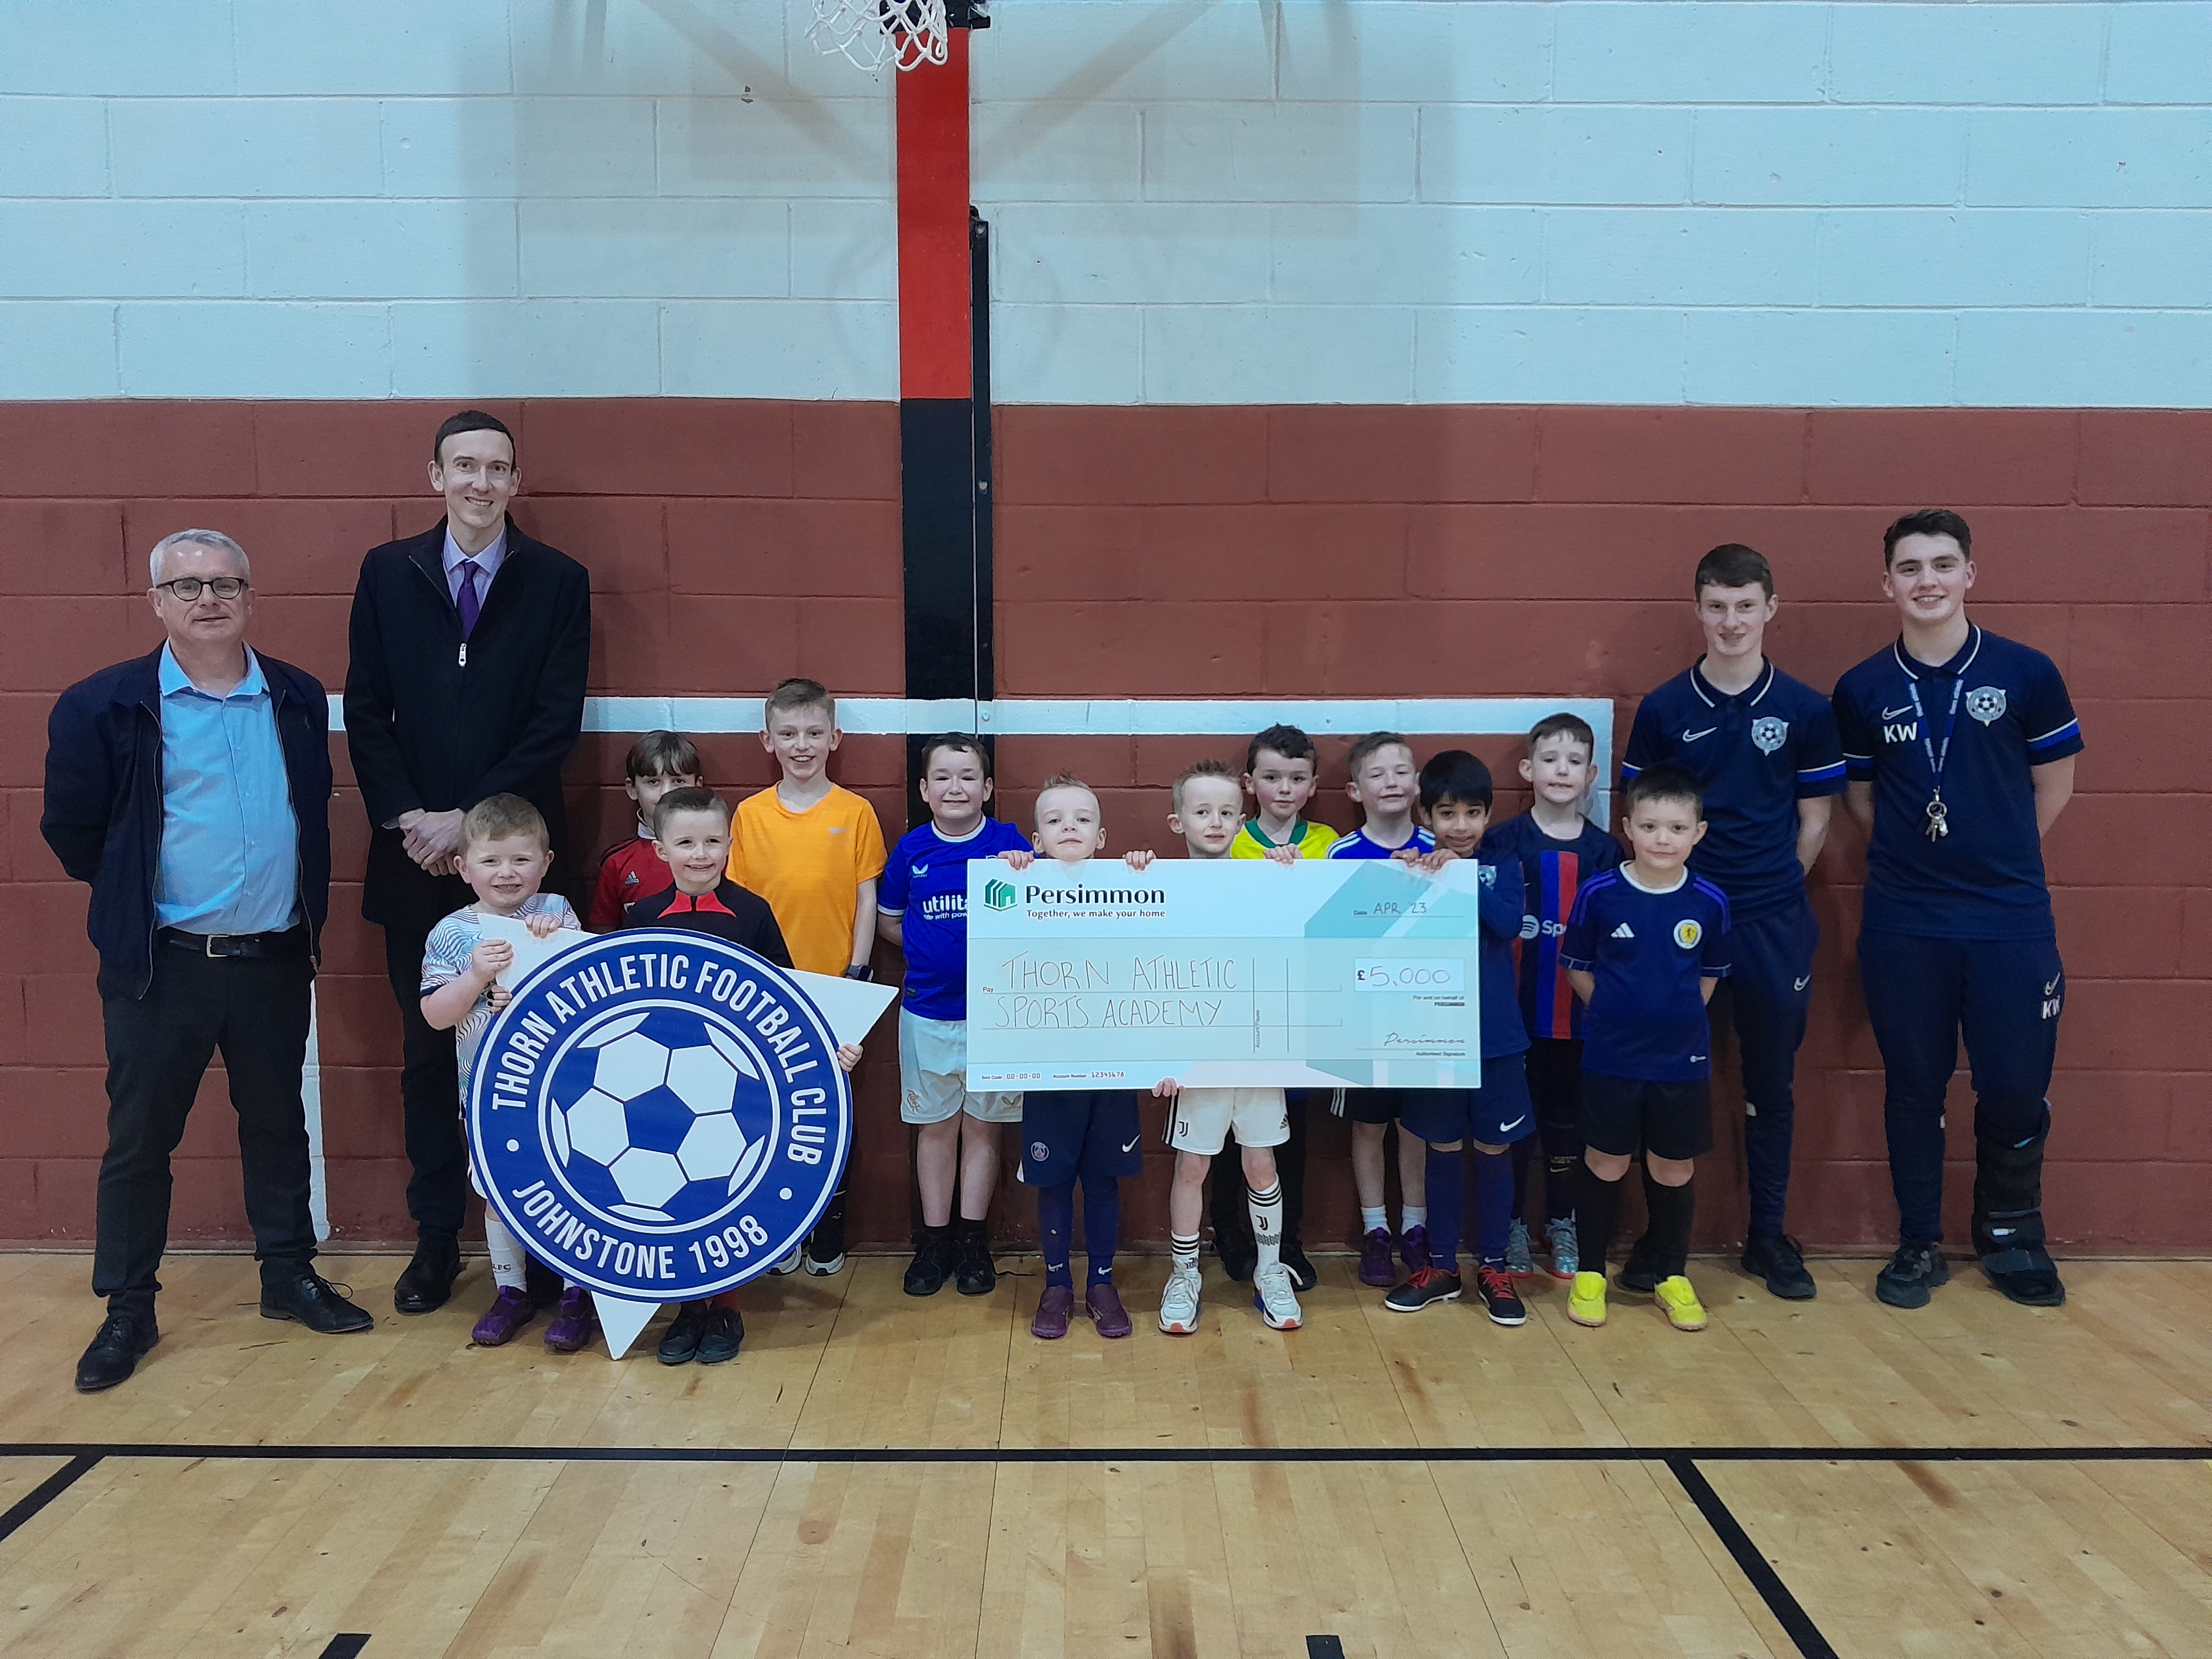 Persimmon donates £5,000 to Thorn Athletic Community Trust